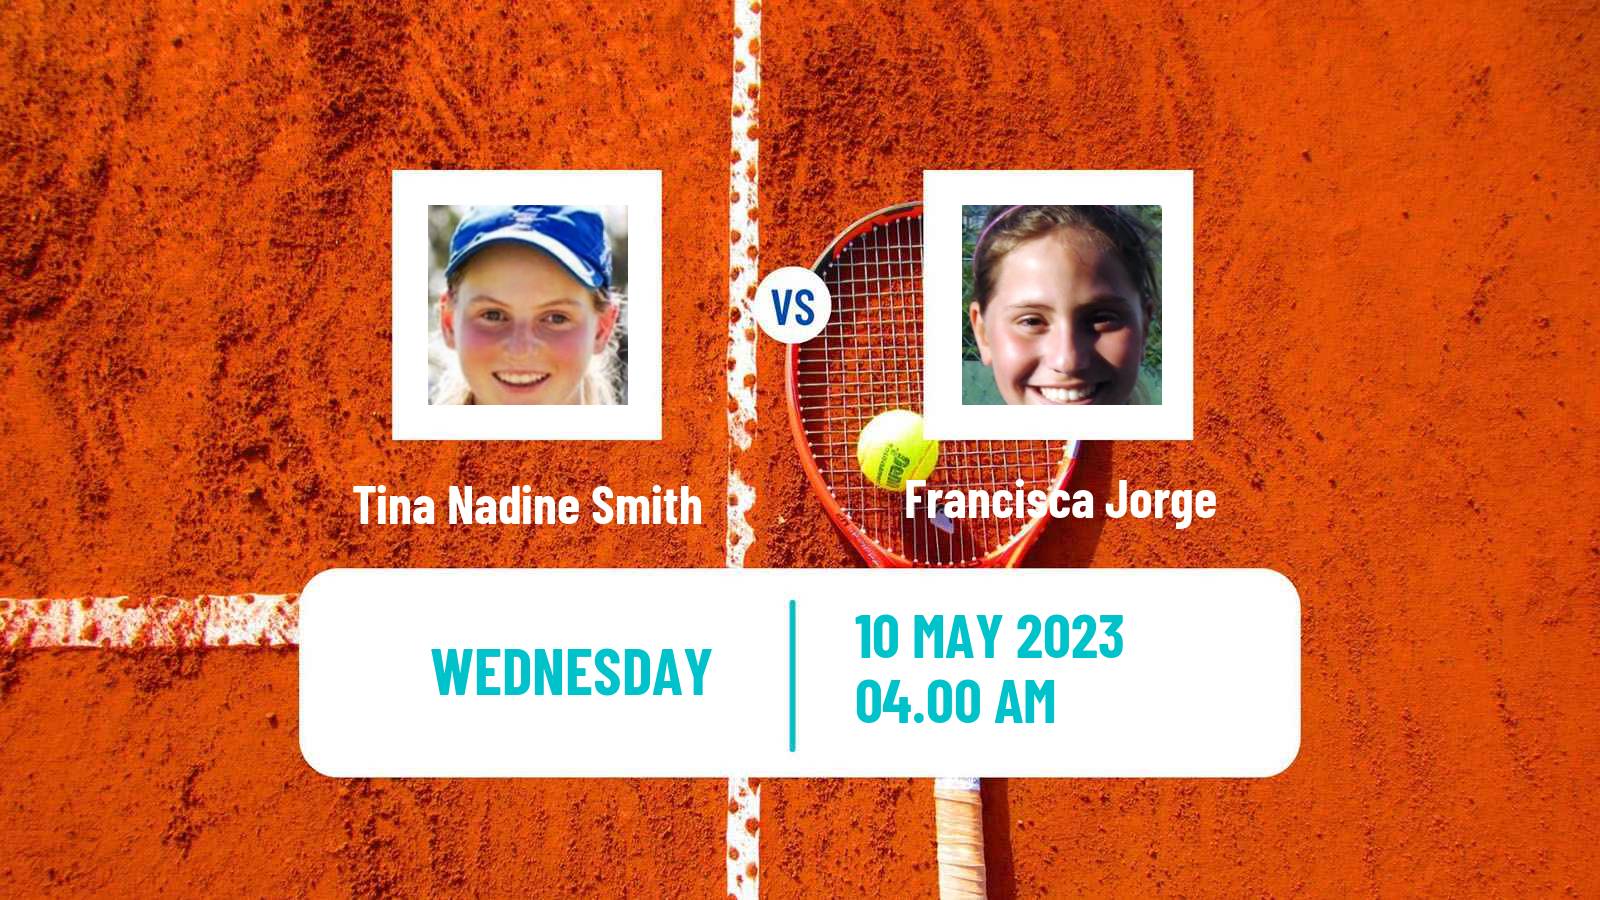 Tennis ITF Tournaments Tina Nadine Smith - Francisca Jorge